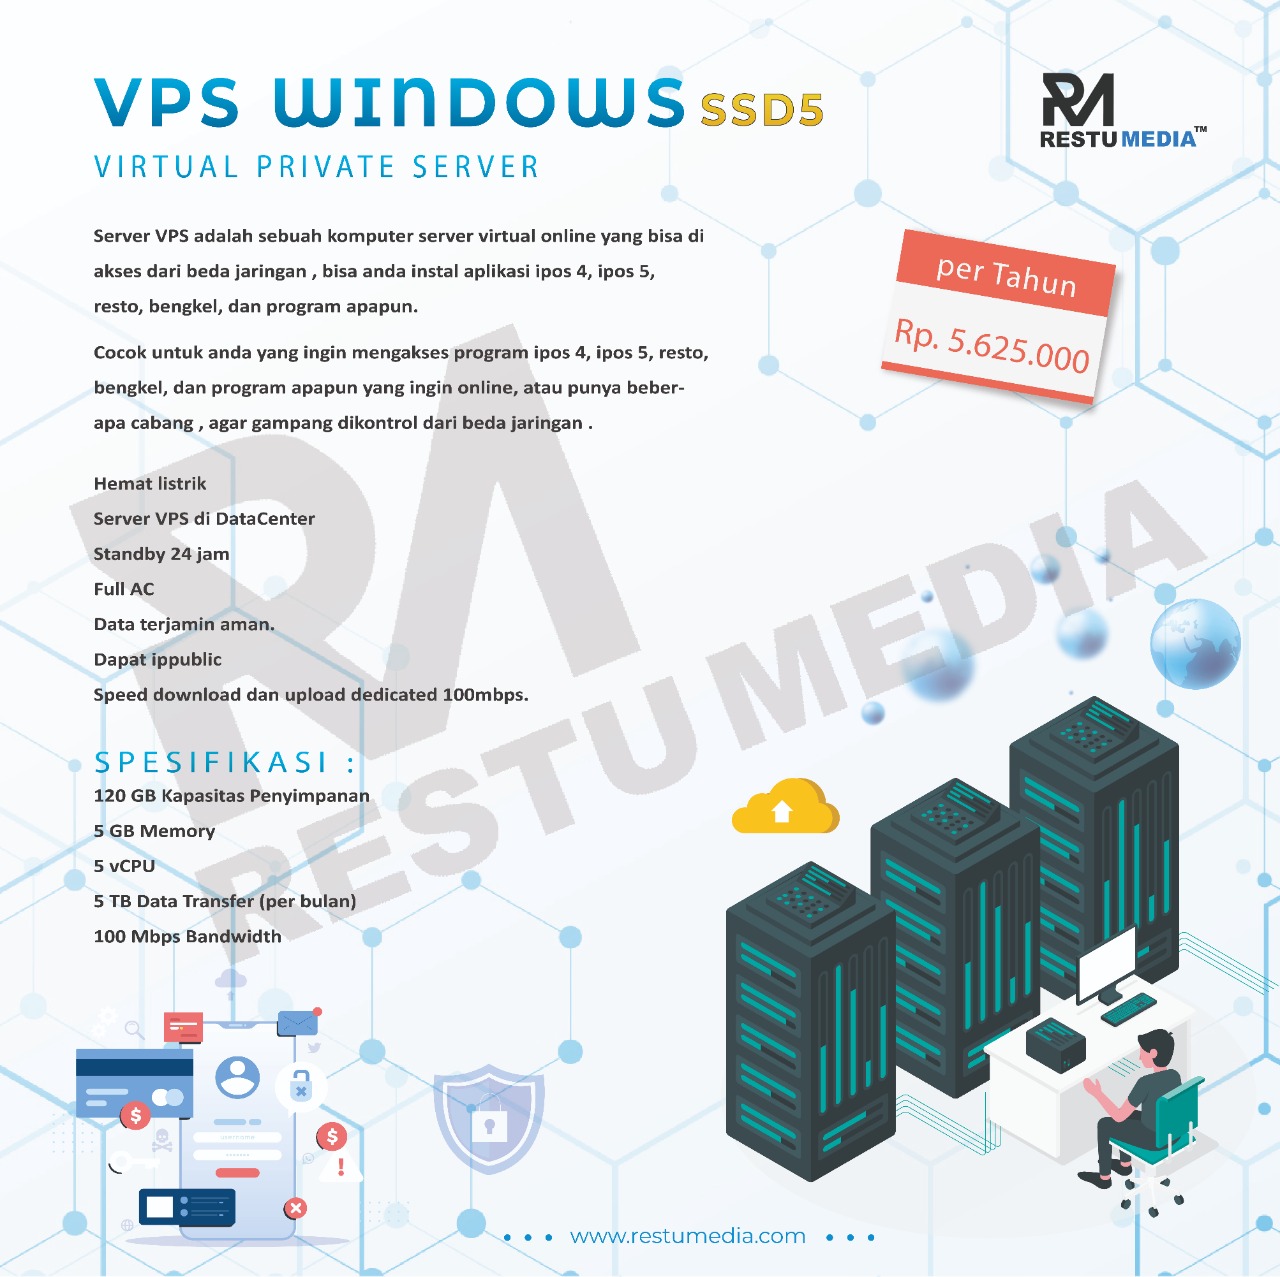 VPS Windows SSD 5